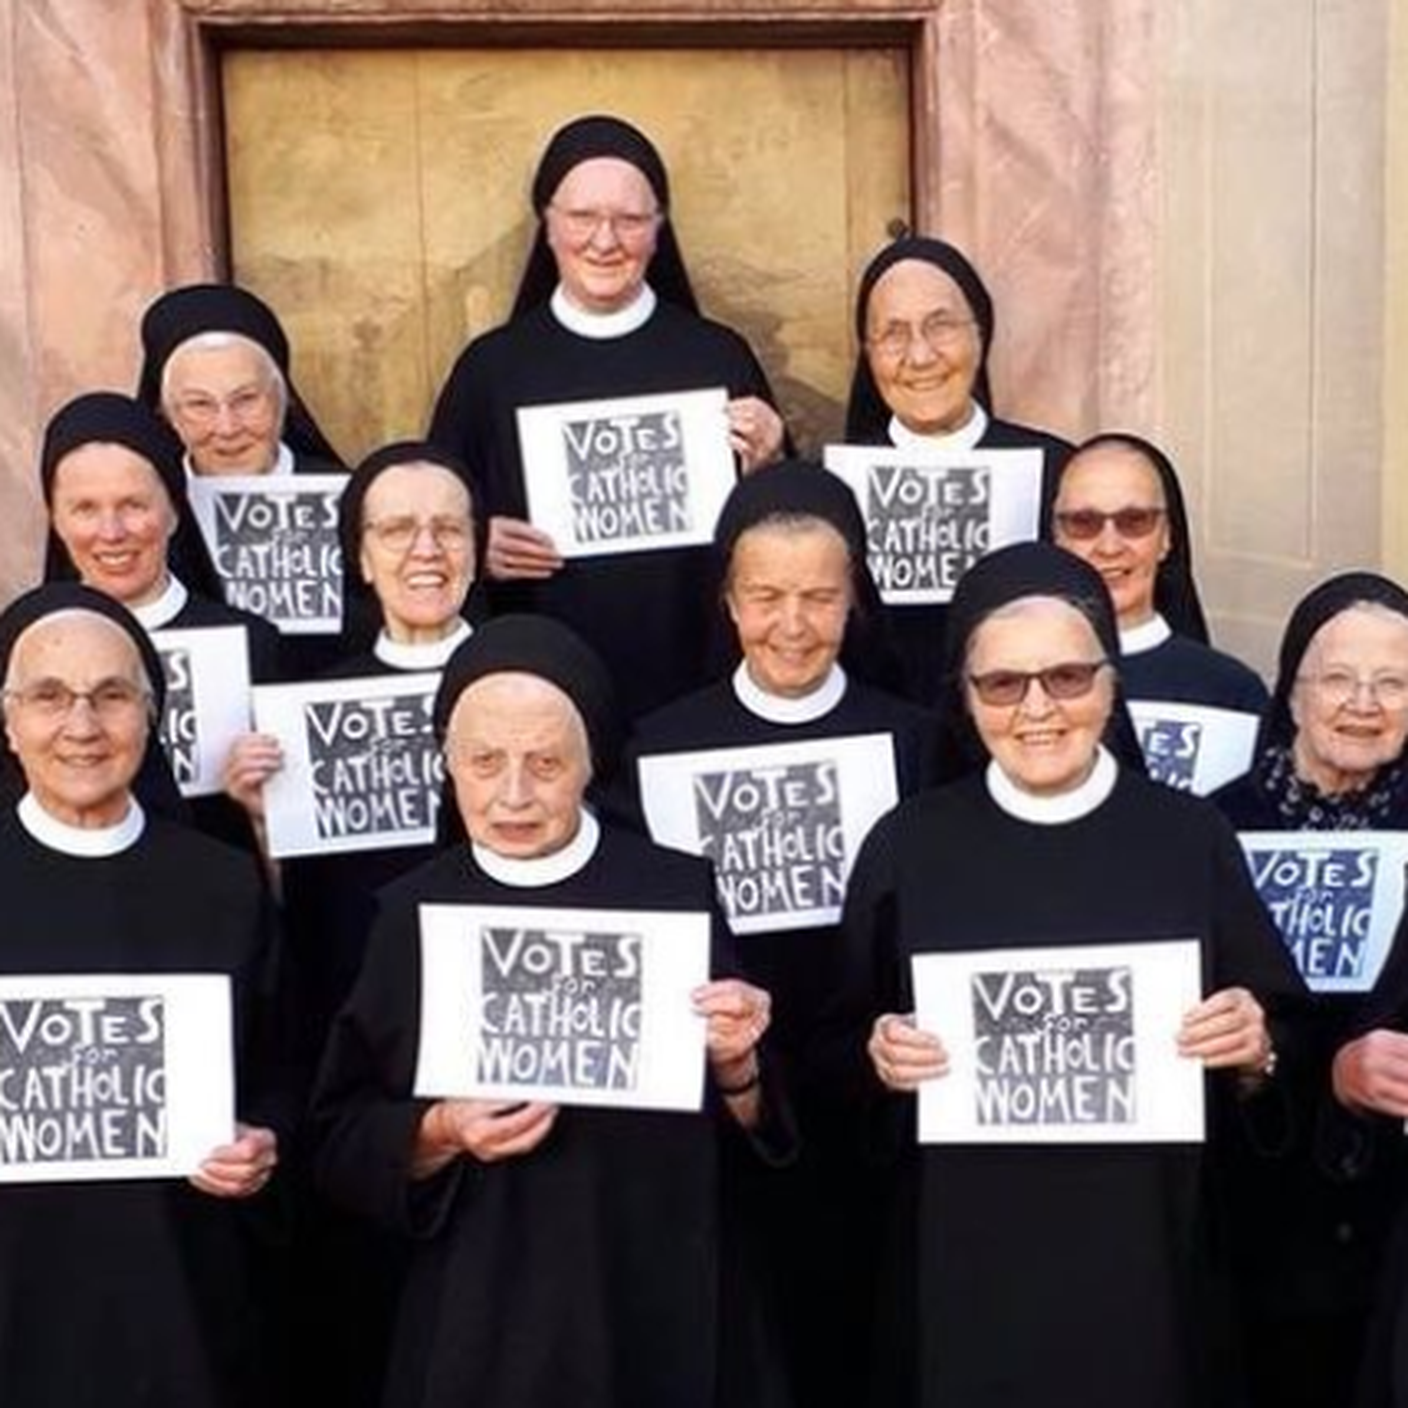 Le suore di Einsiedeln: "Votes for catholic women"